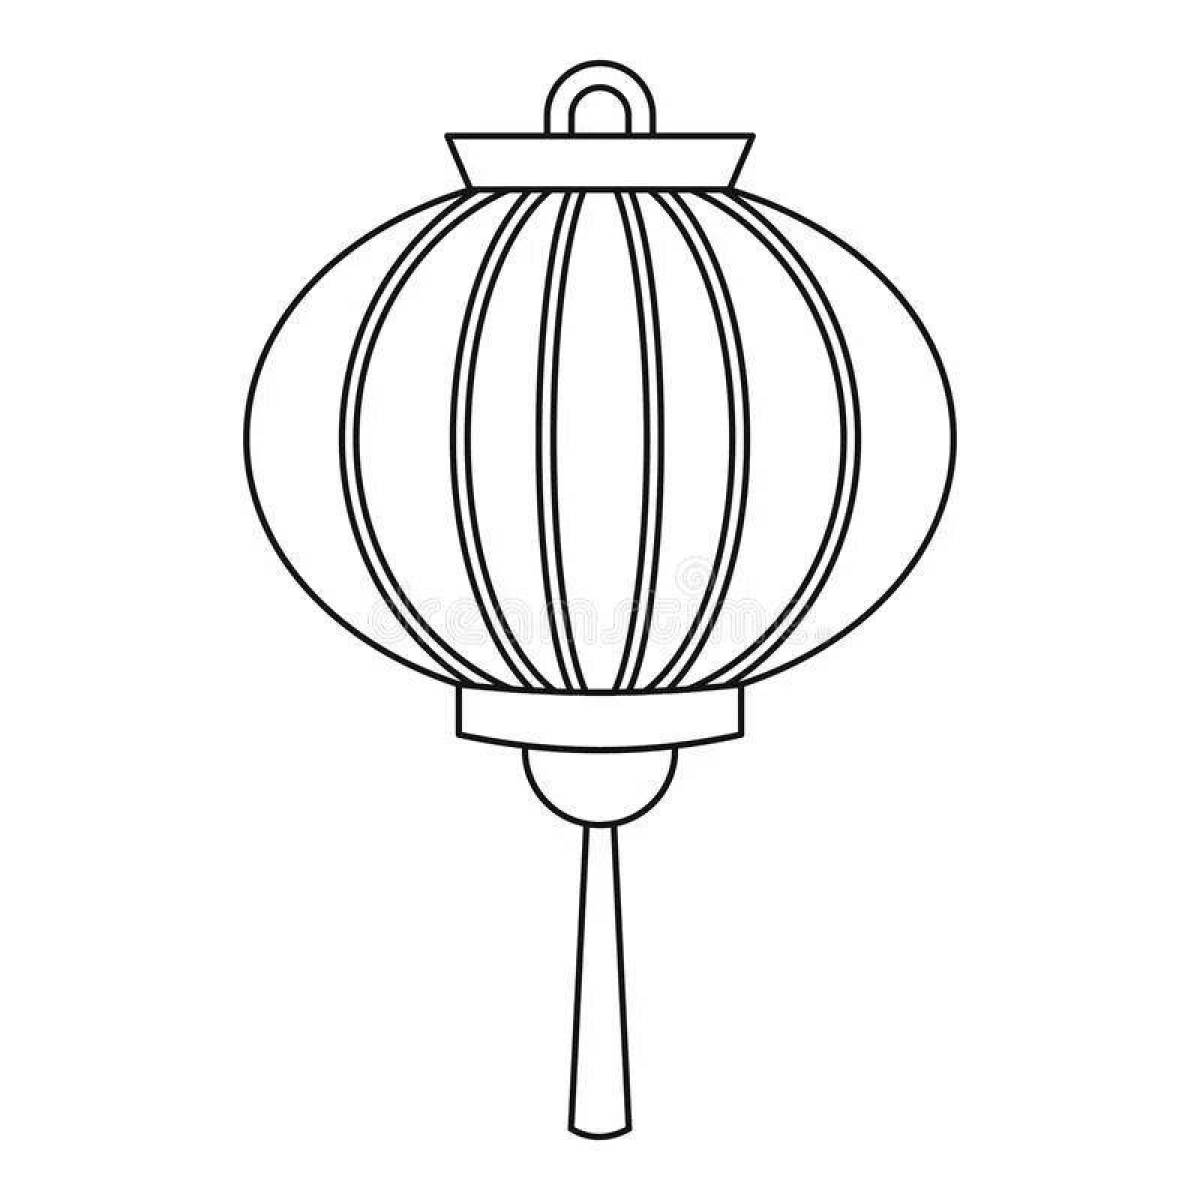 Chinese lantern coloring book